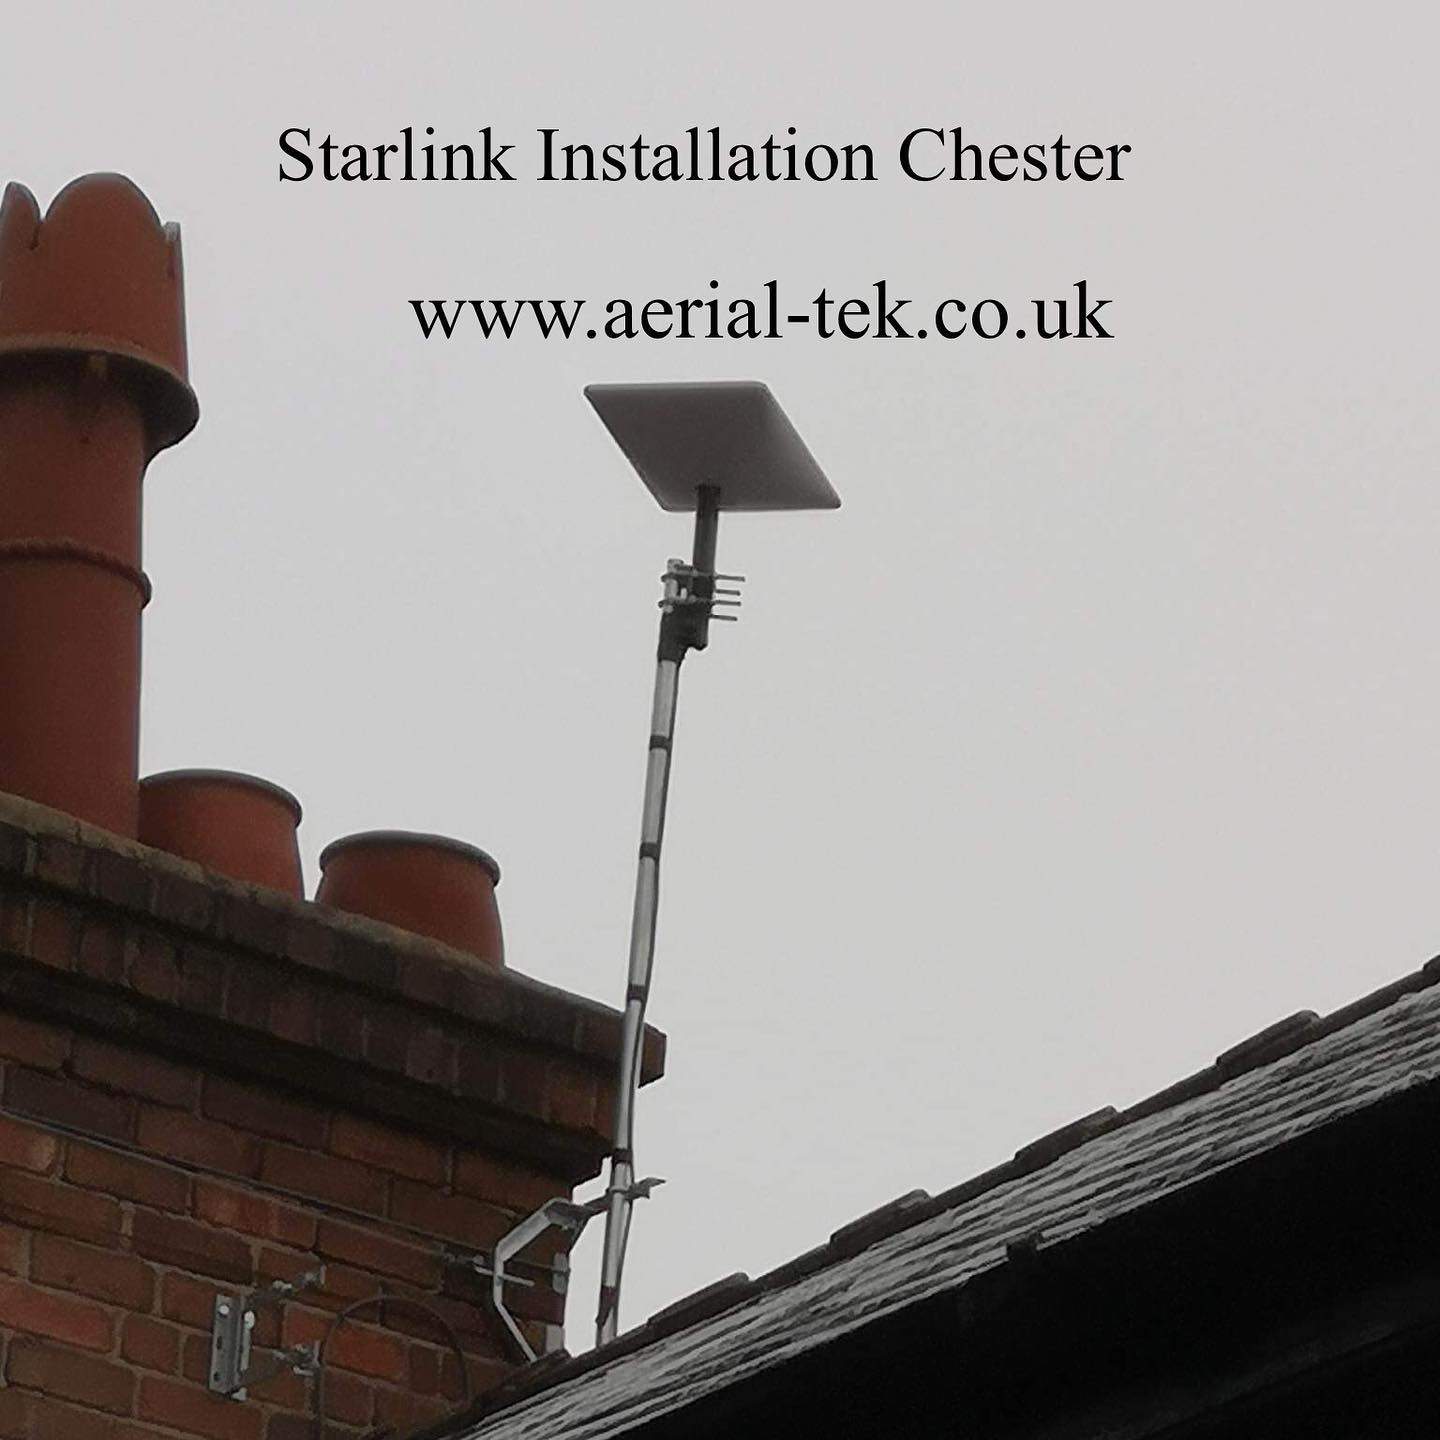 Starlink Installation Chester